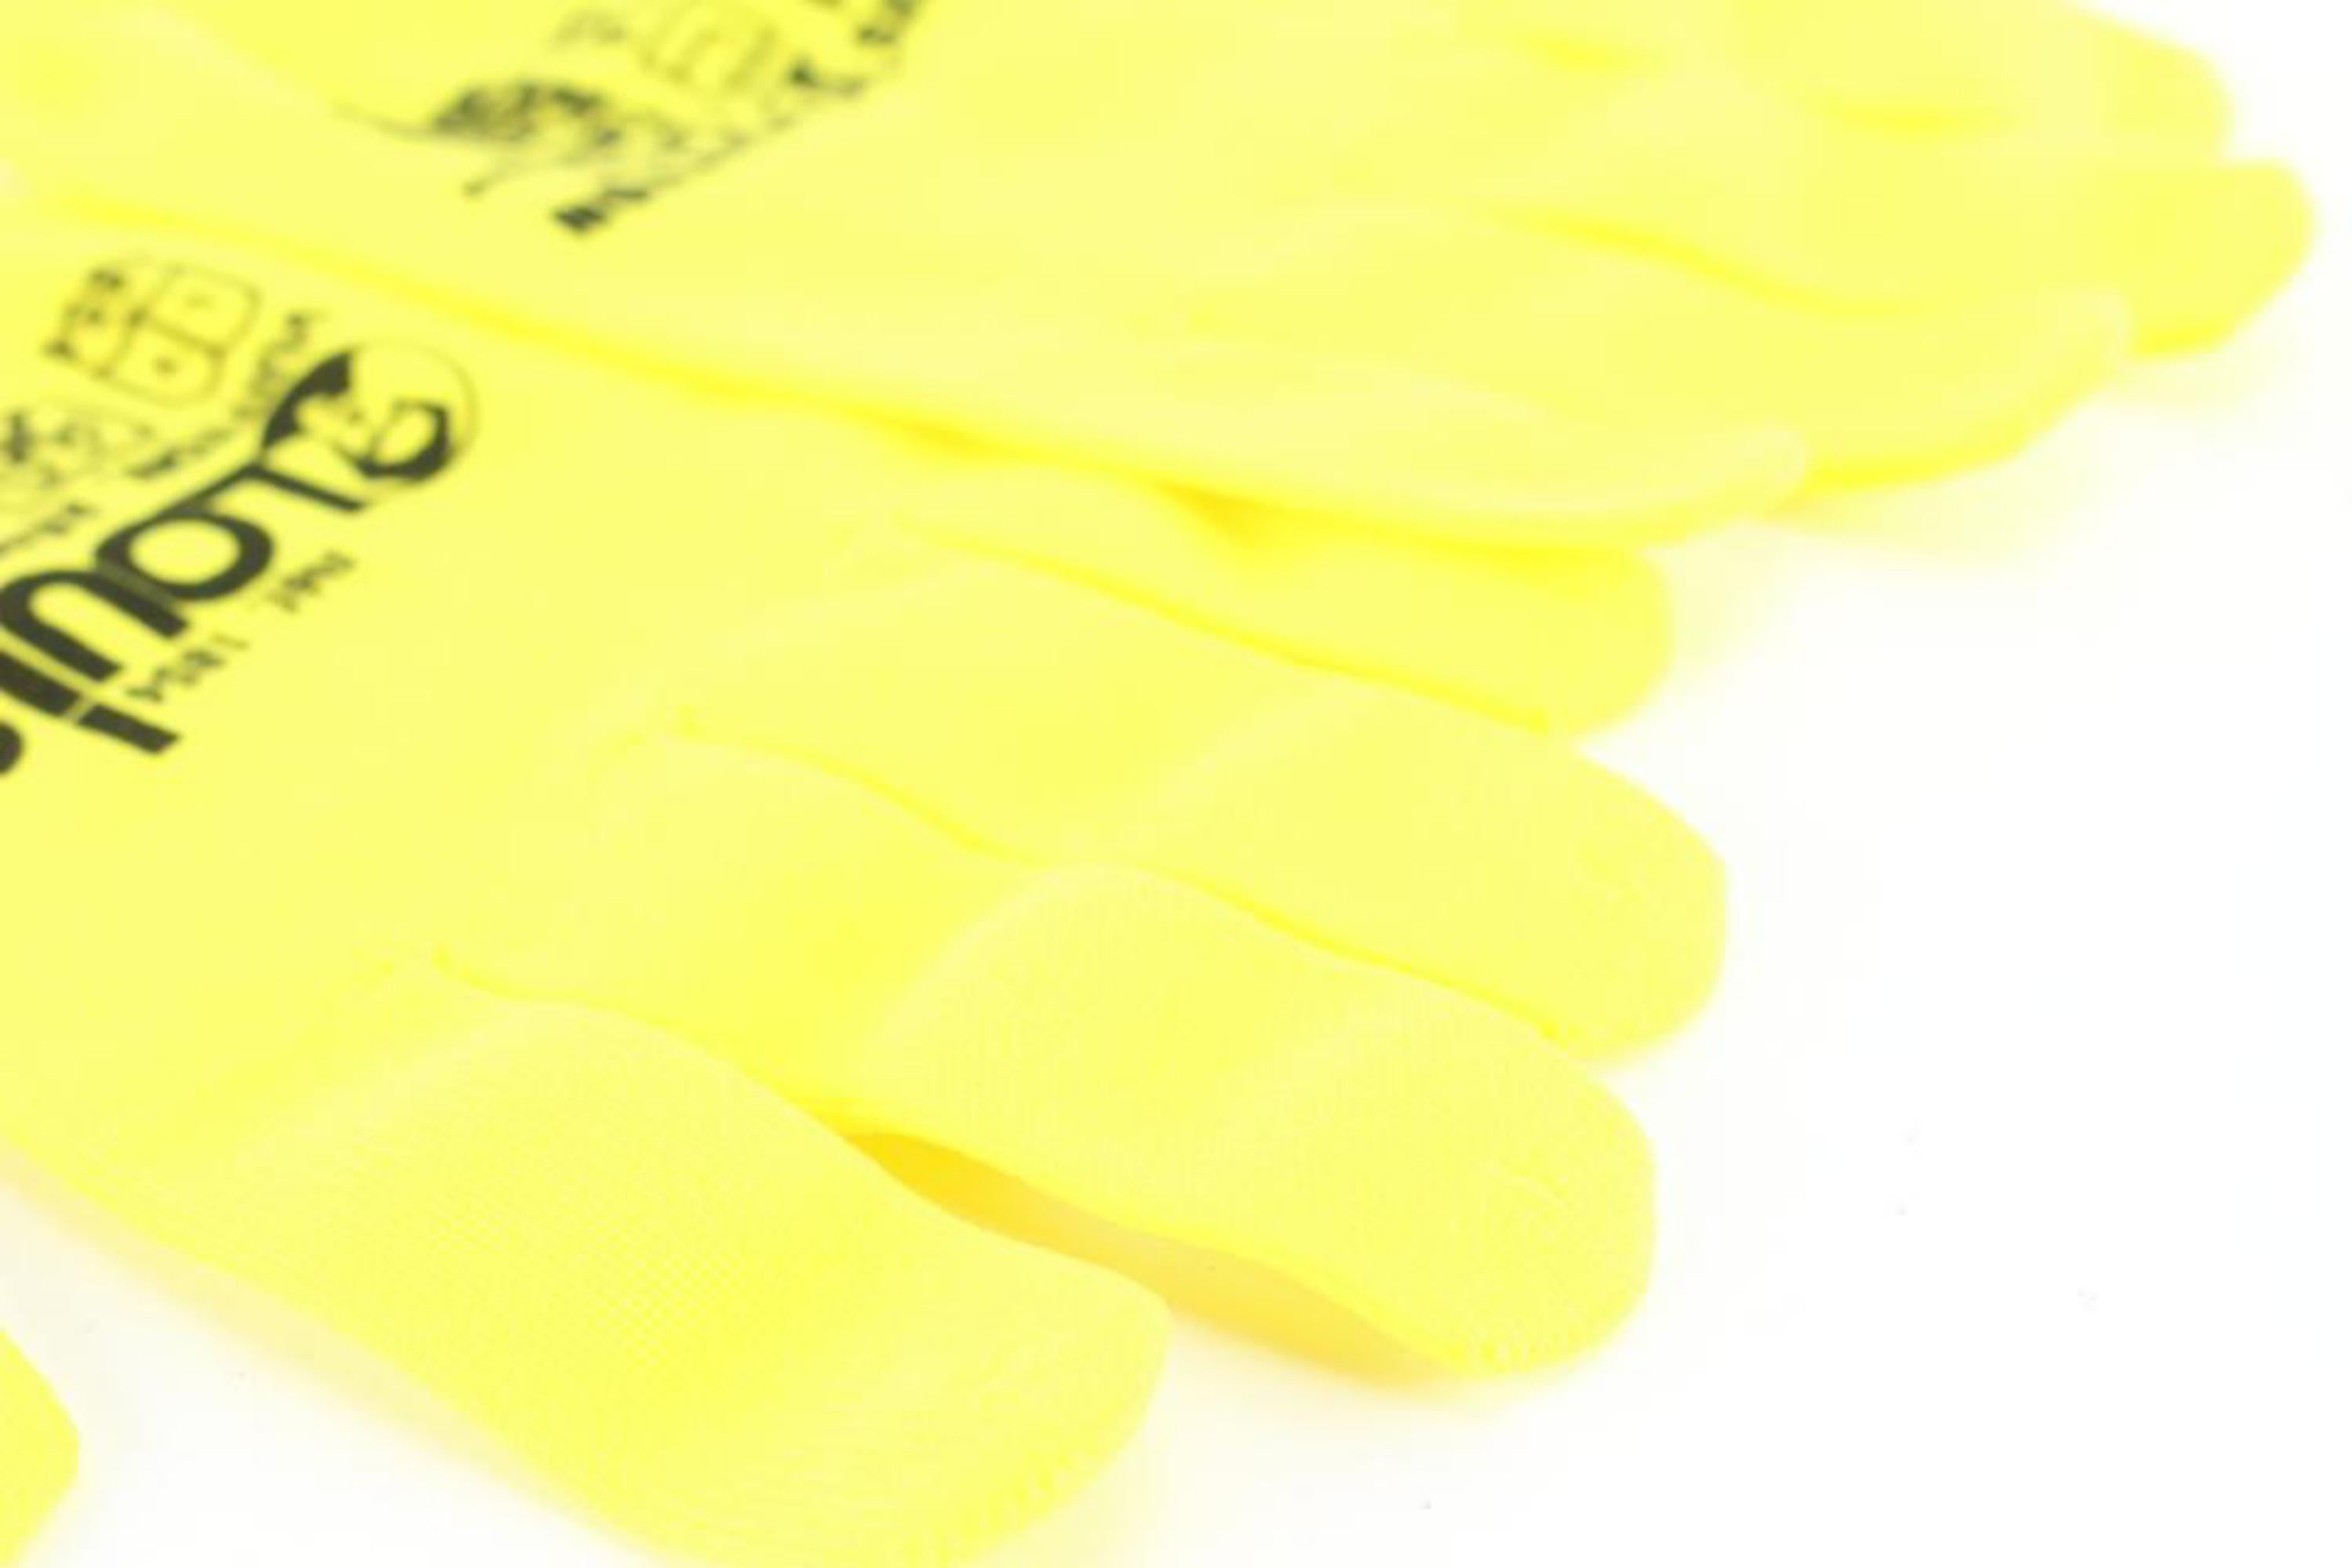 Louis Vuitton Virgil Abloh Pop Up Work Gloves Yellow x Green 2lz830s